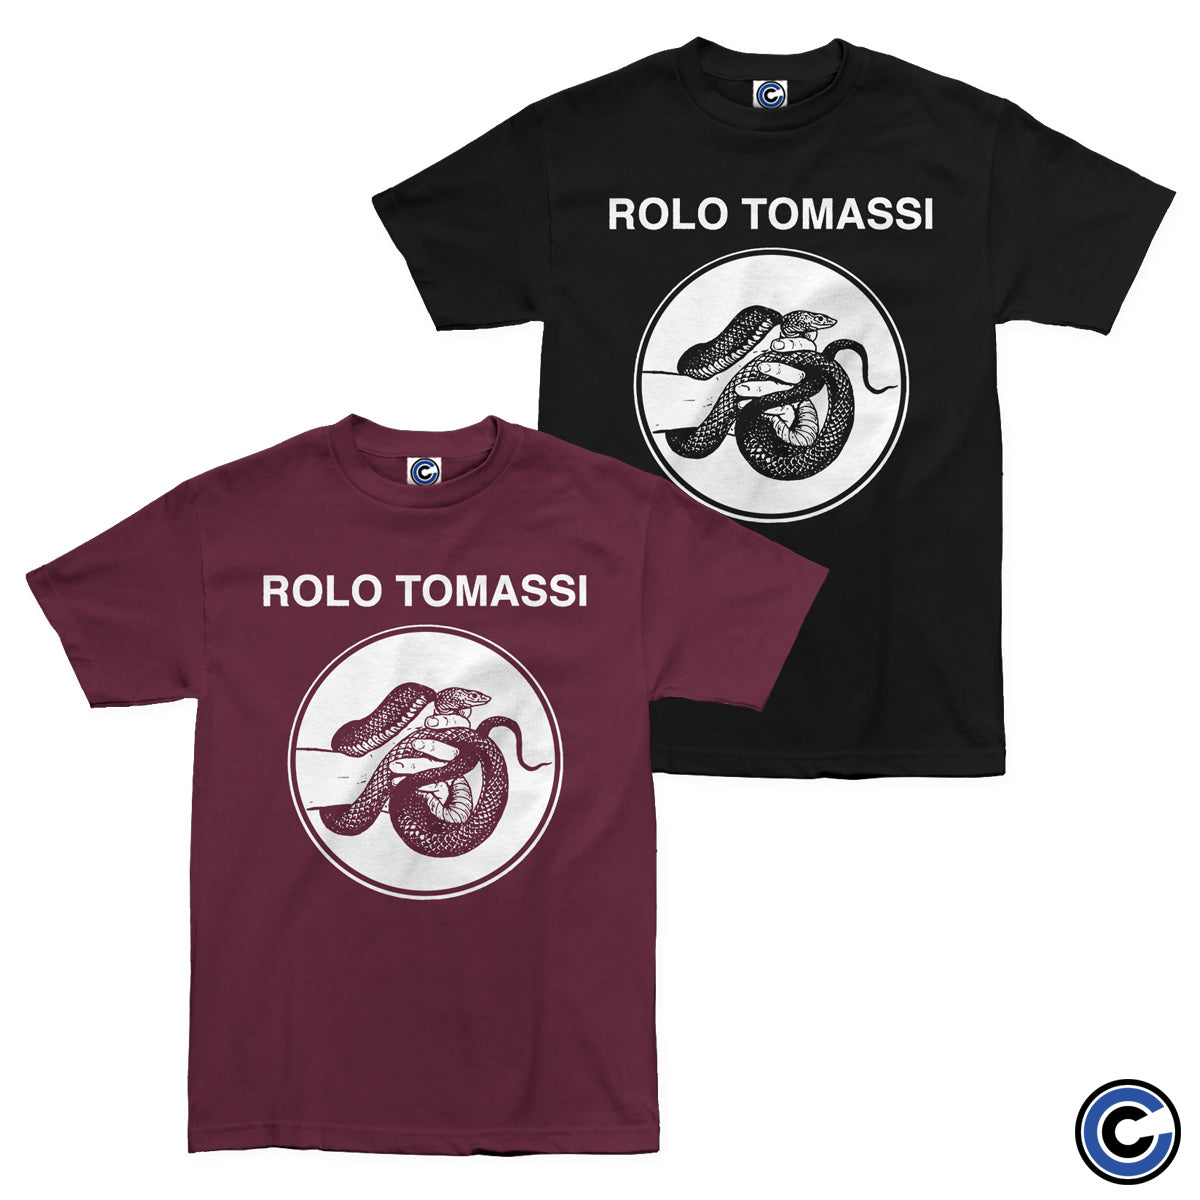 Rolo Tomassi "Snake Fist" Shirt